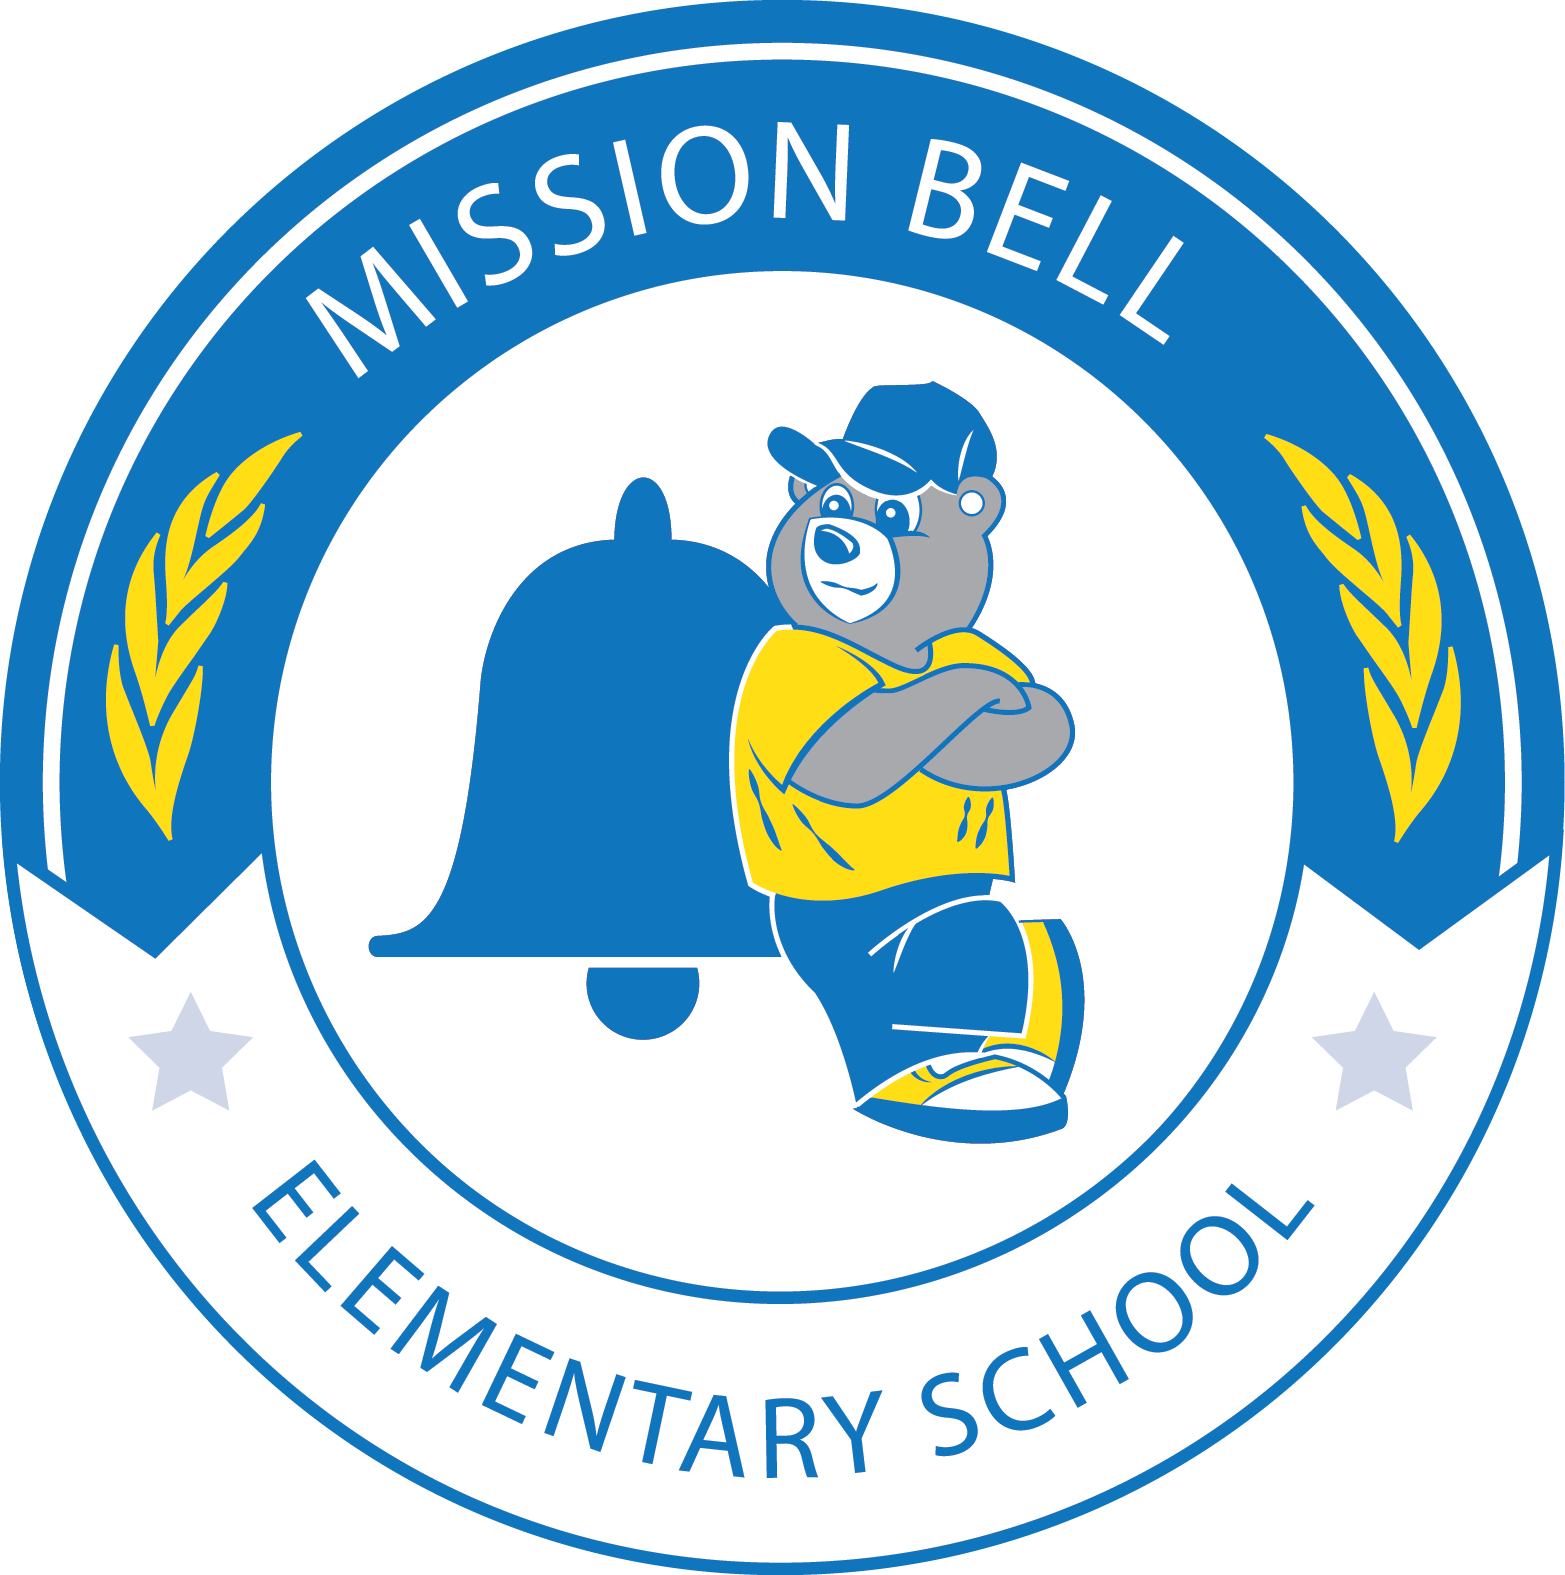 Mission Bell logo.png